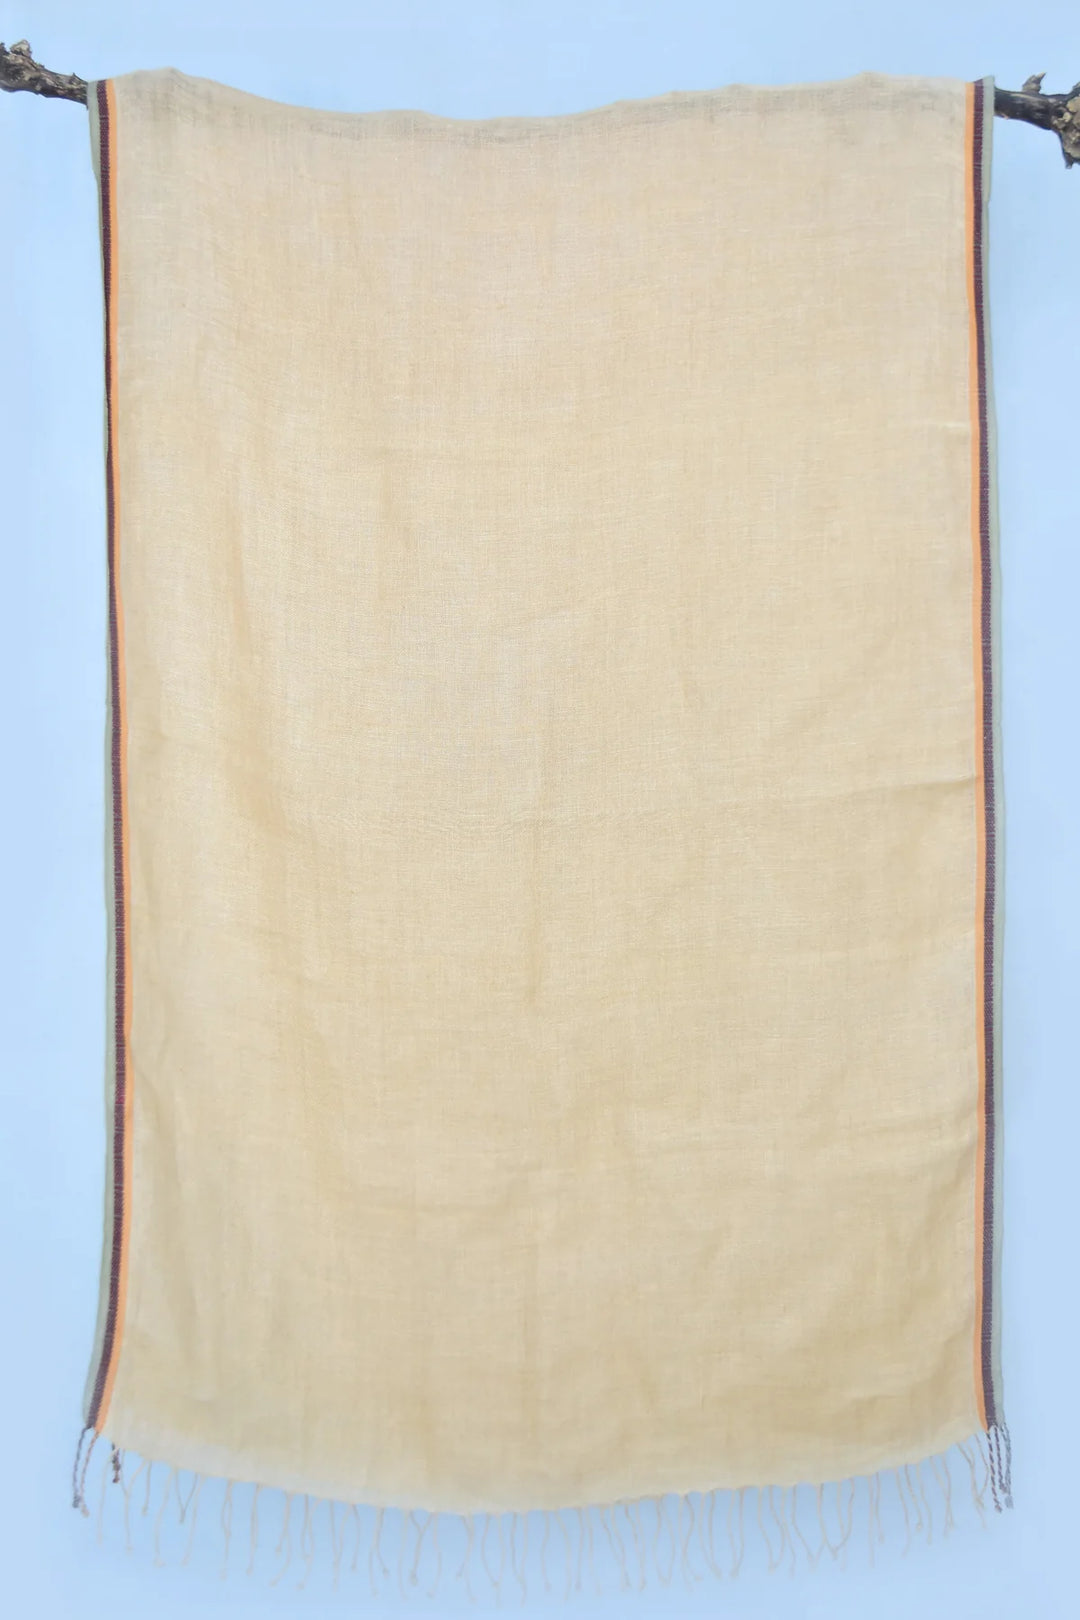 Handwoven Linen Stole - Elegant Ivory Color | Sanguine Handwoven Linen Stole - Ivory